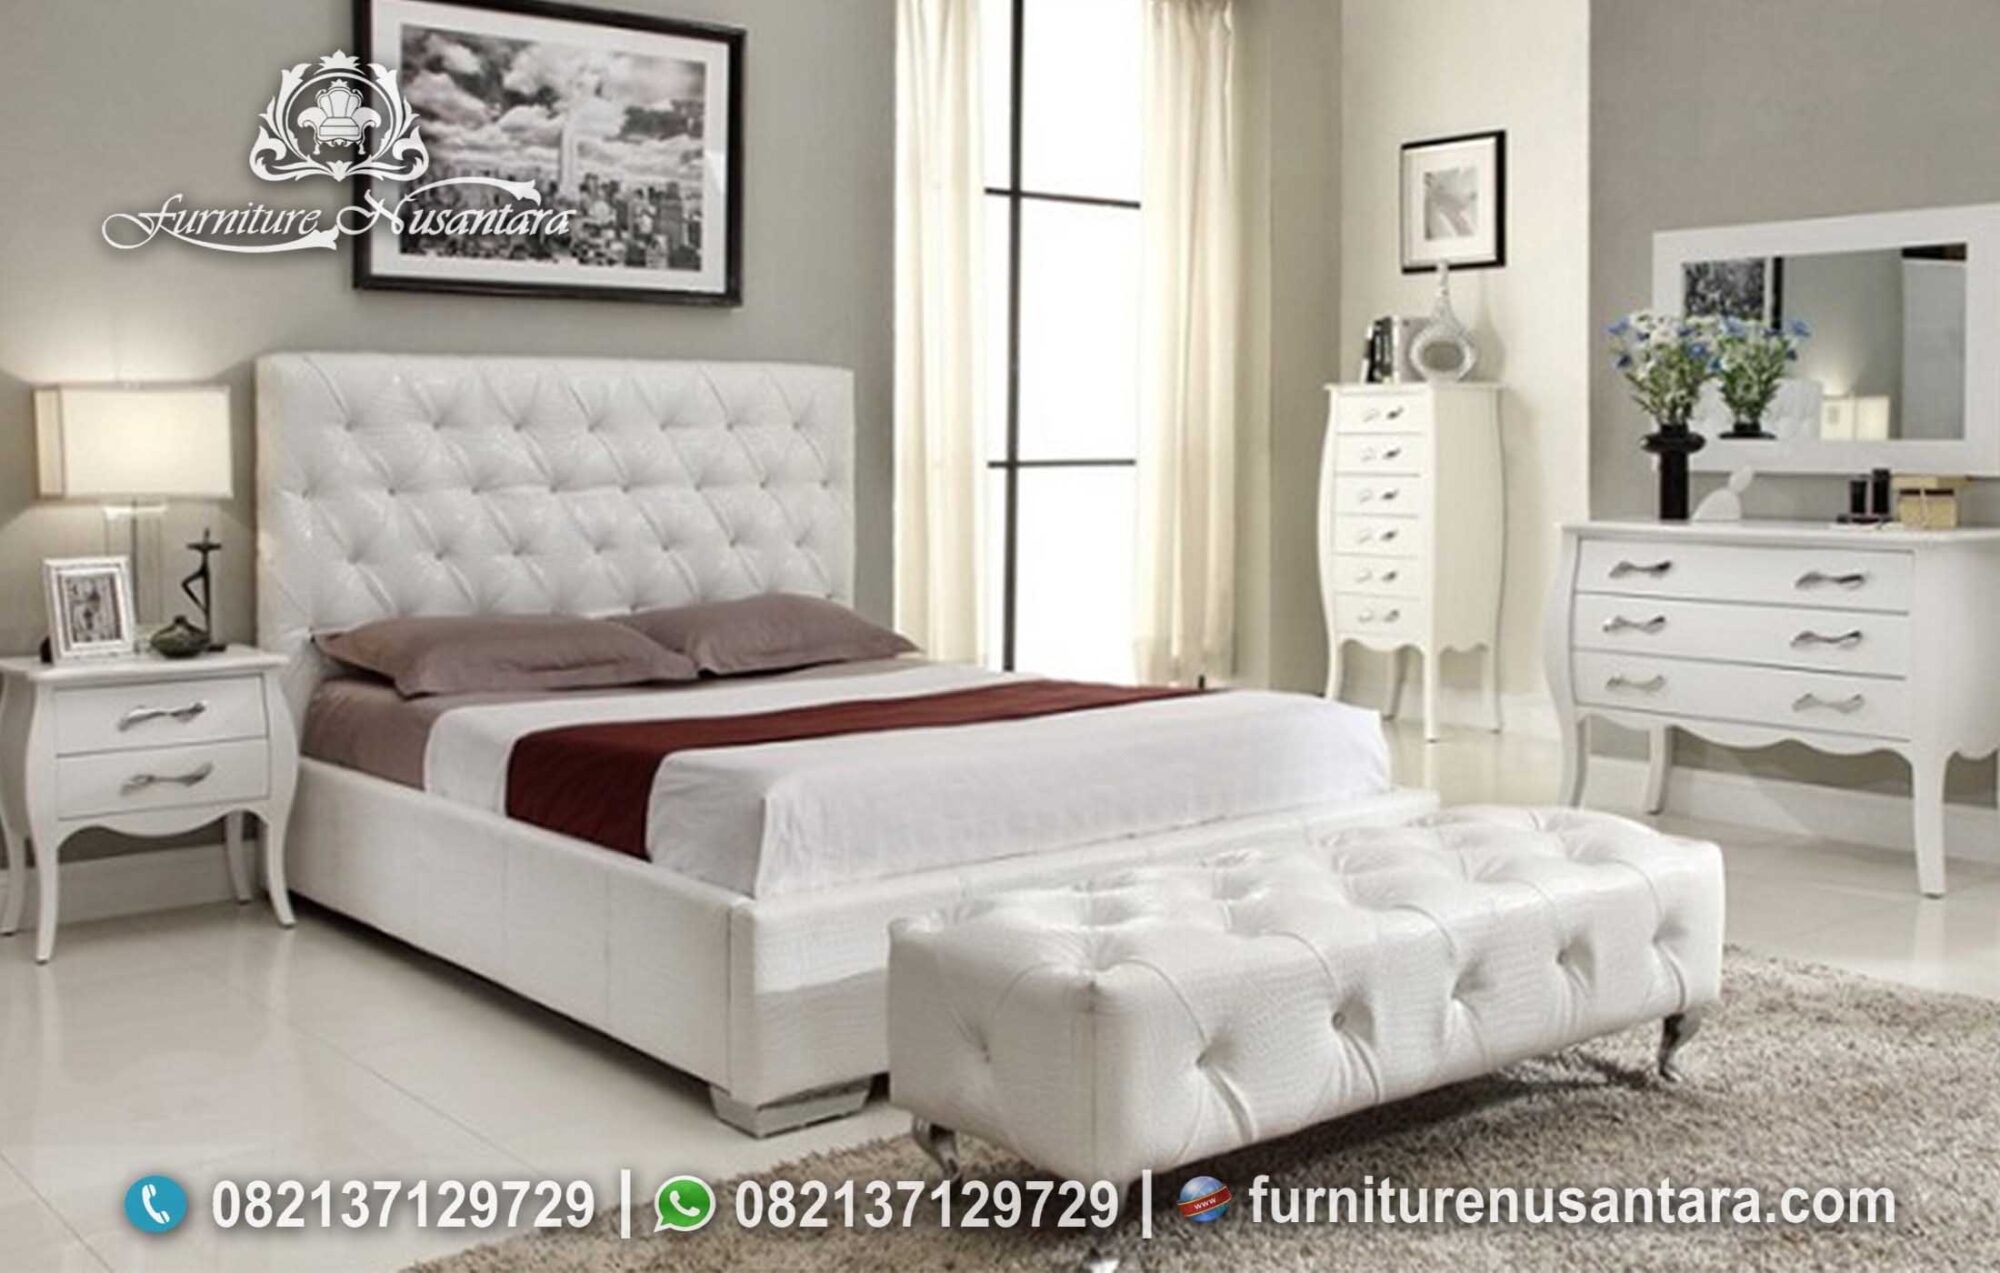 Desain Tempat Tidur Minimalis Italian Leather KS-225, Furniture Nusantara